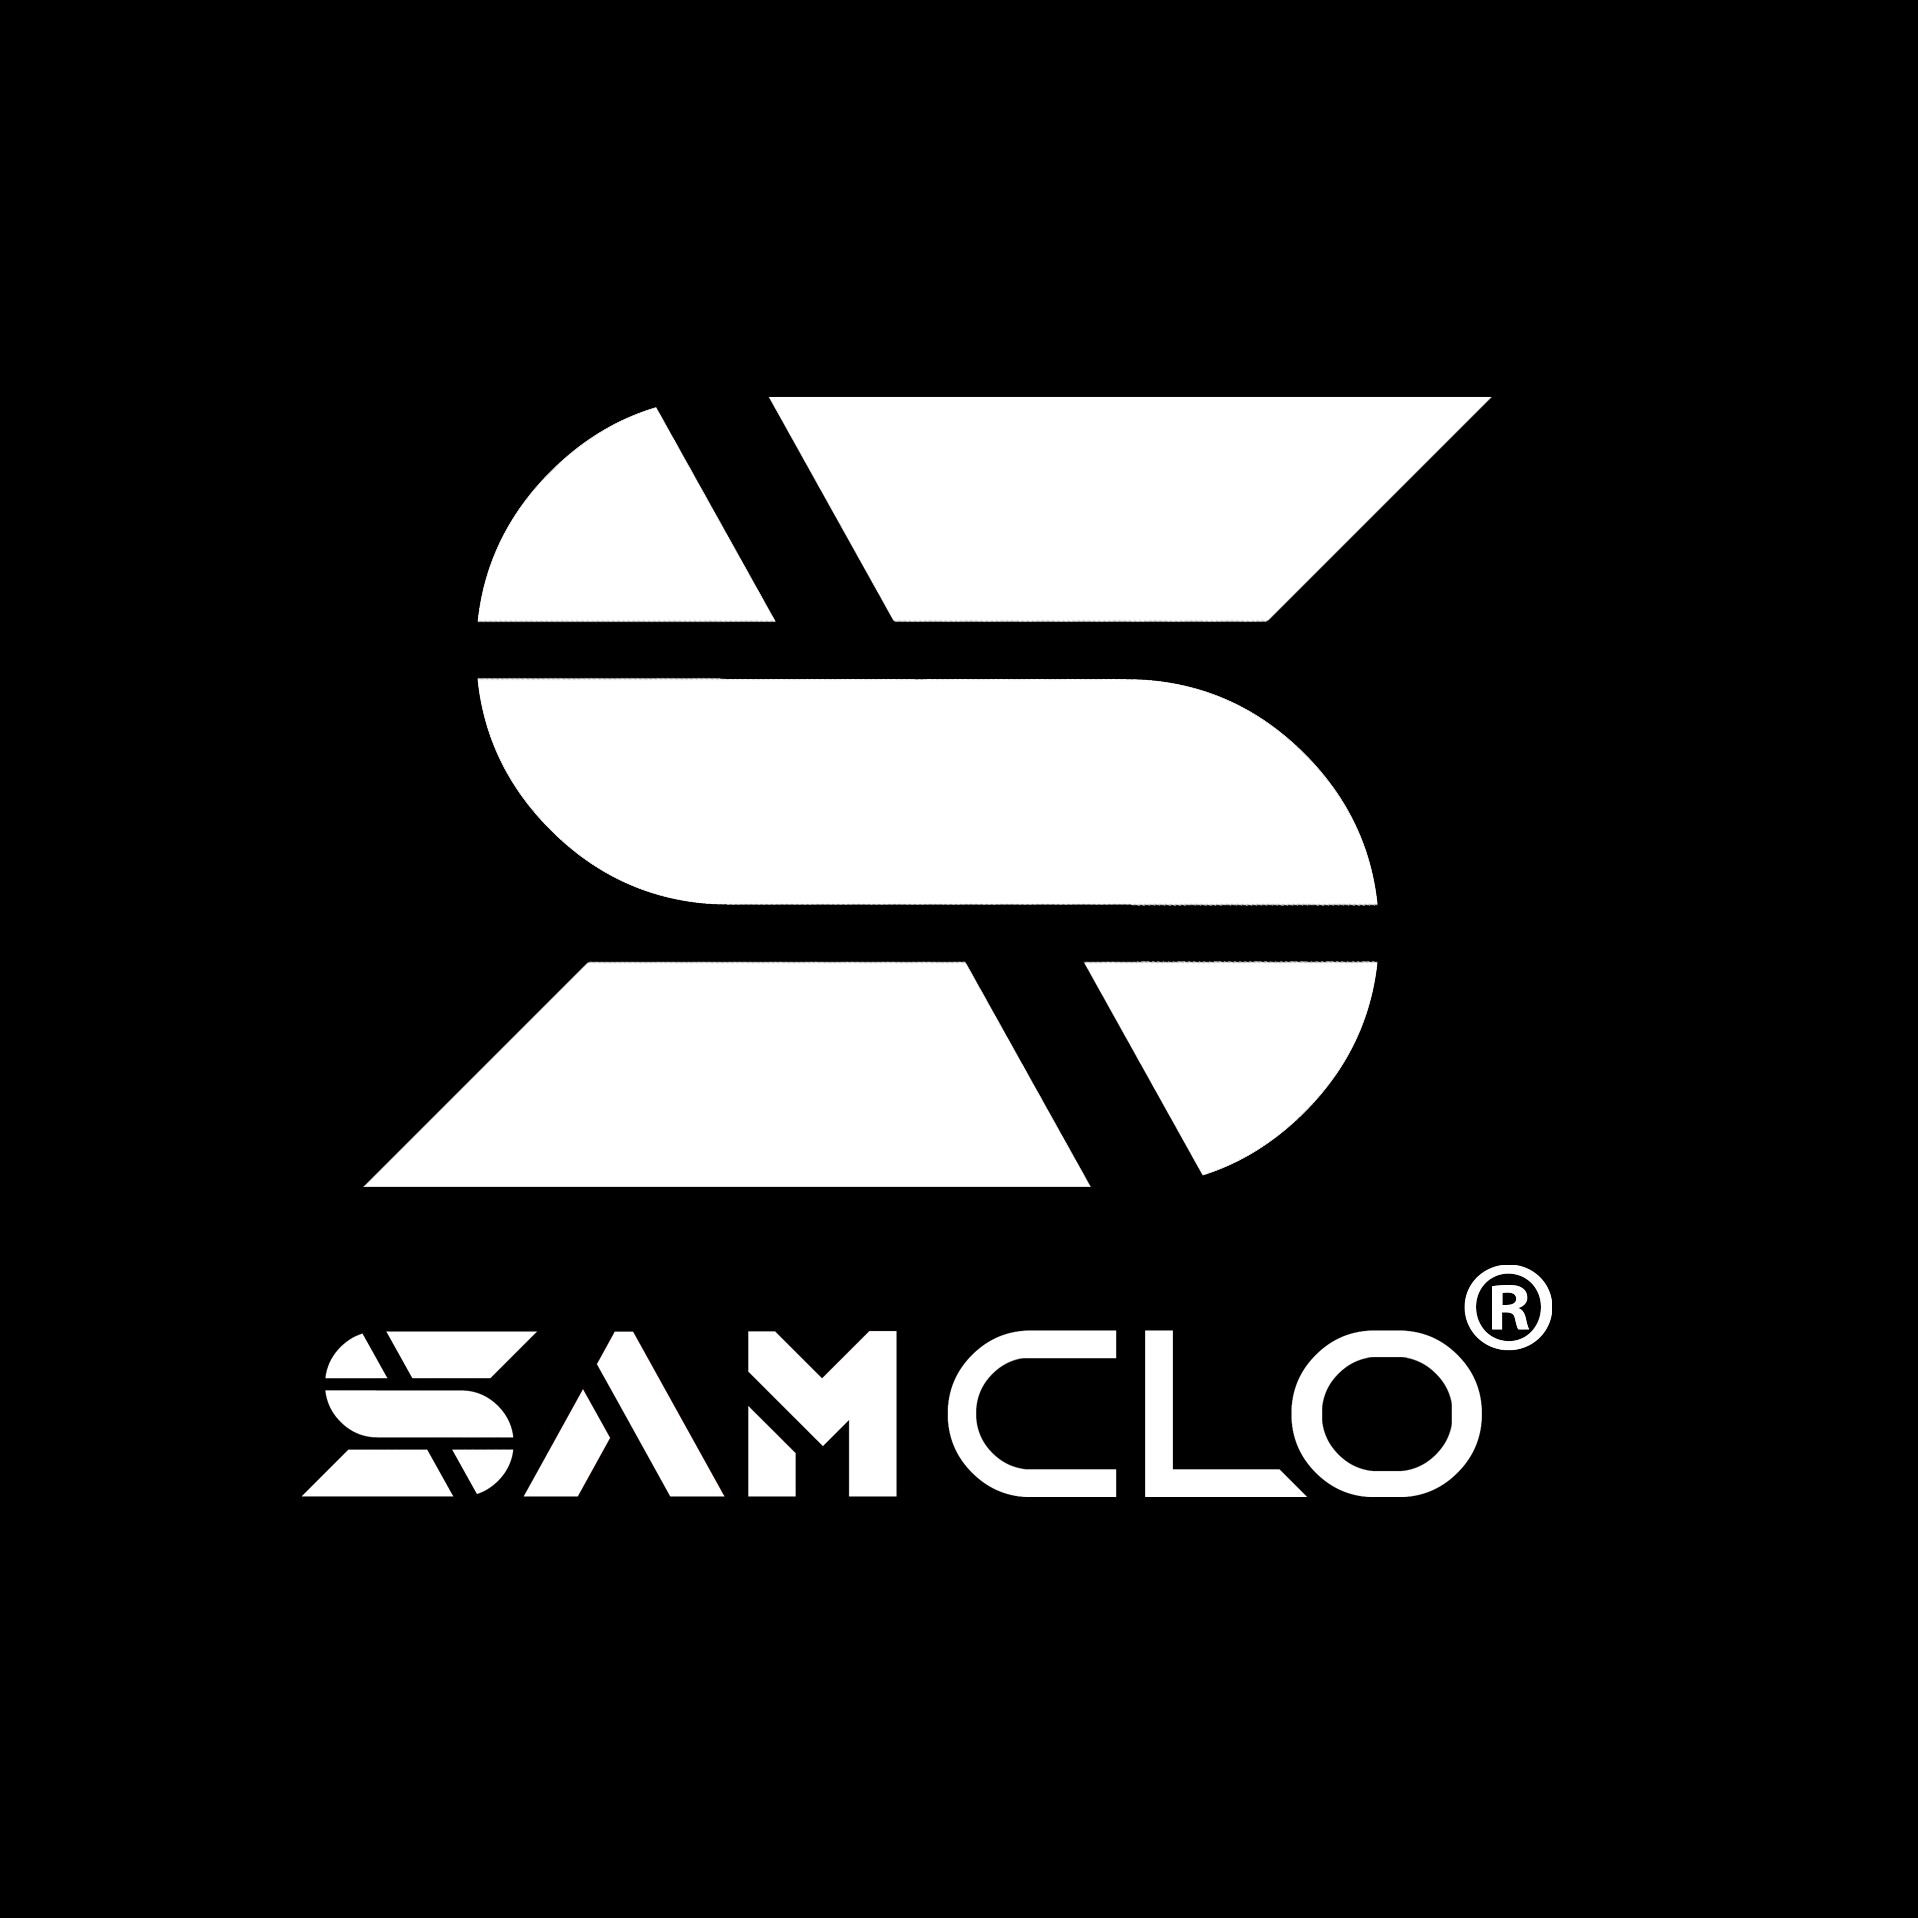 SAM CLO - Thời Trang Unisex